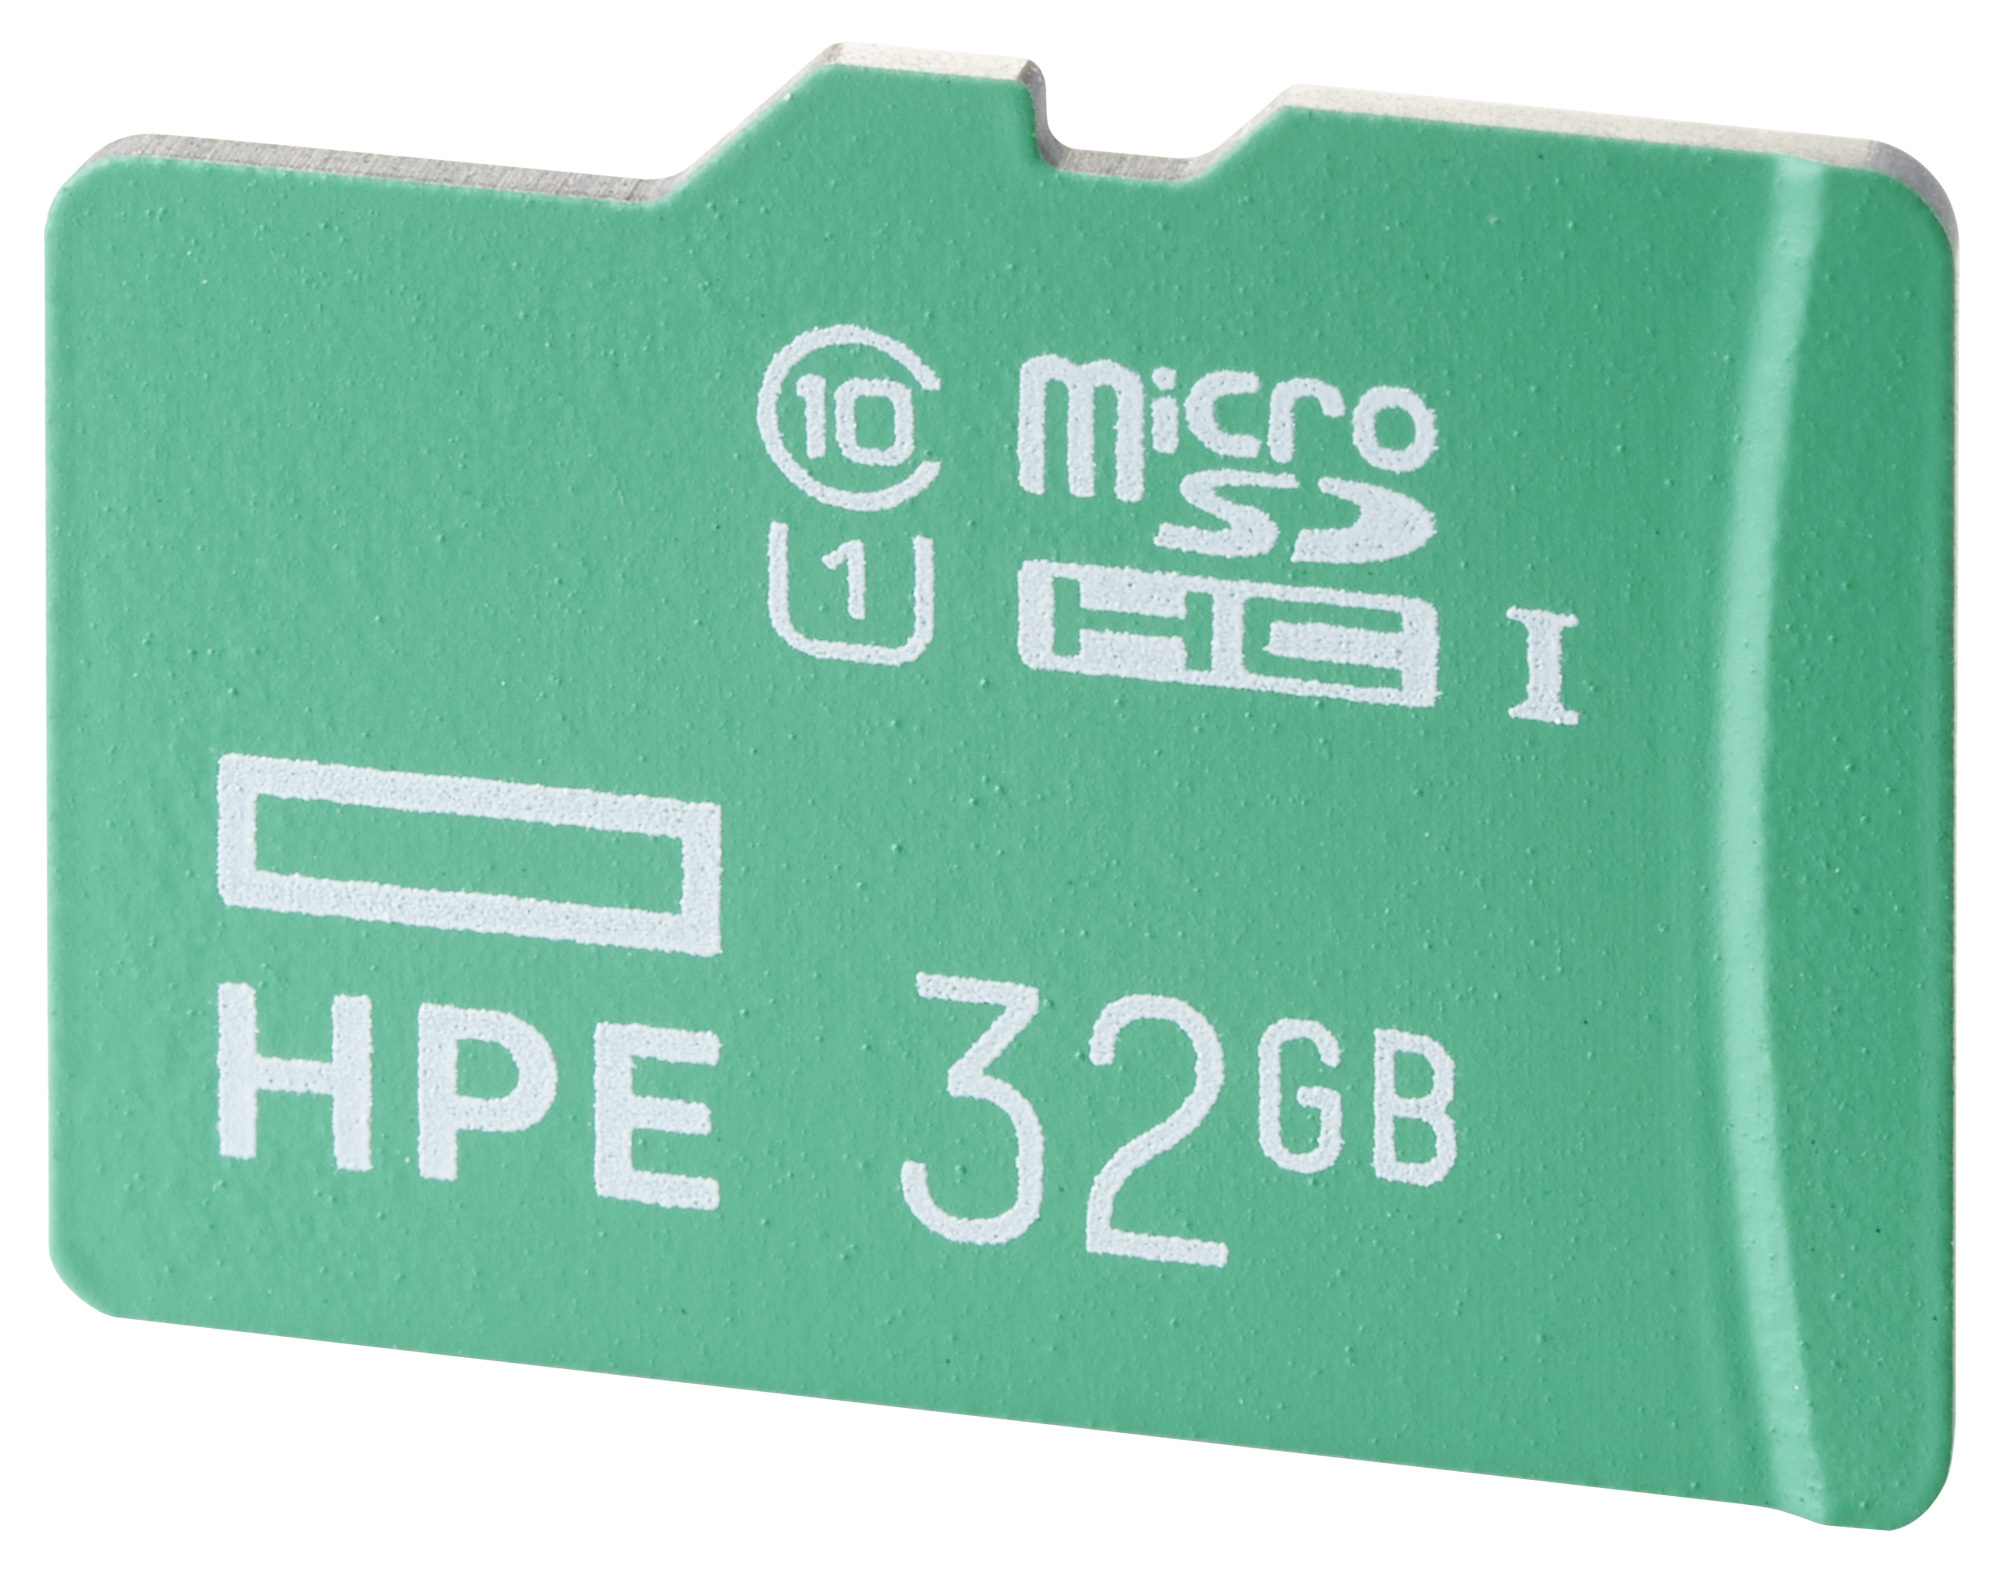 Микро 21. 700139-B21. Карта памяти HPE (700139-b21).